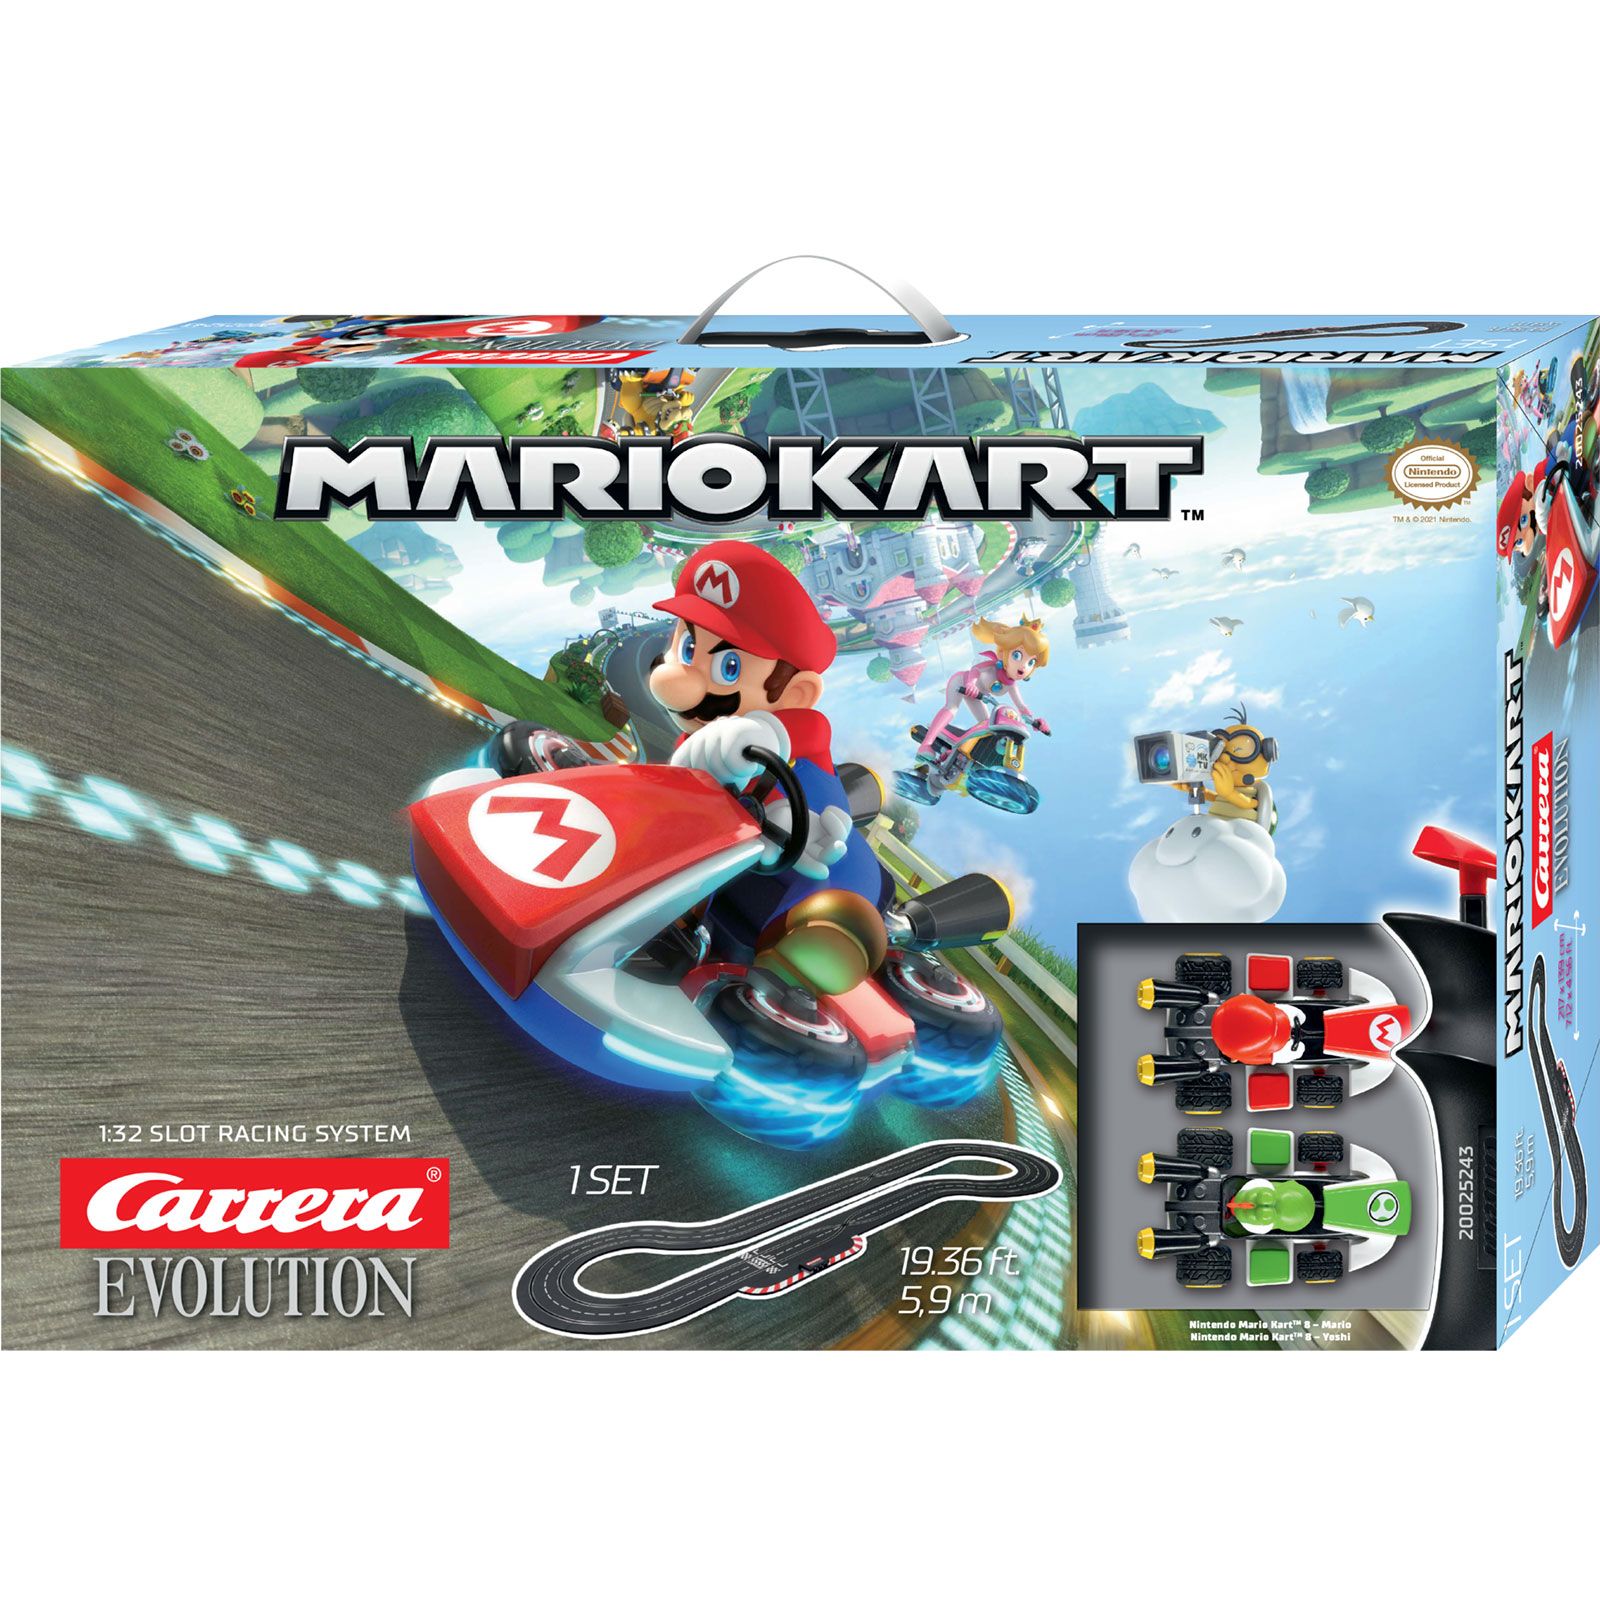 Carrera Mario Kart ™ Evolution Set